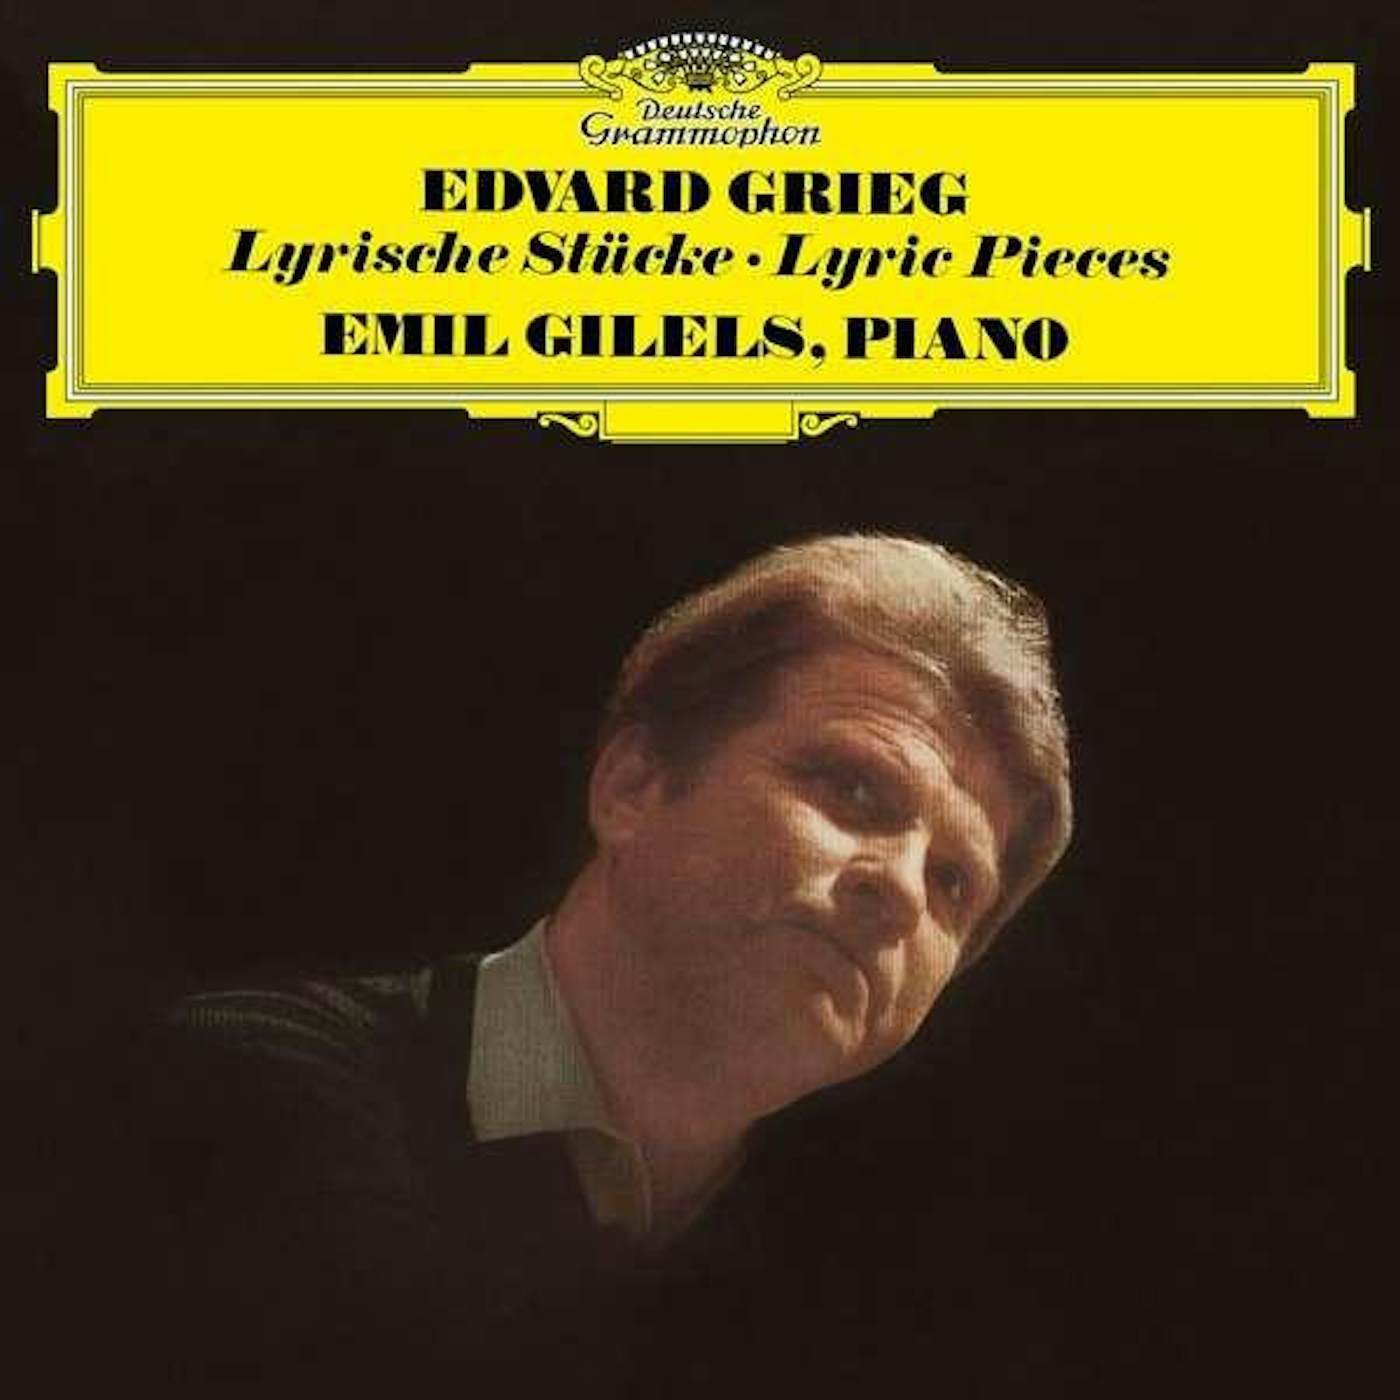 Emil Gilels GRIEG: LYRIC PIECES (180G) Vinyl Record